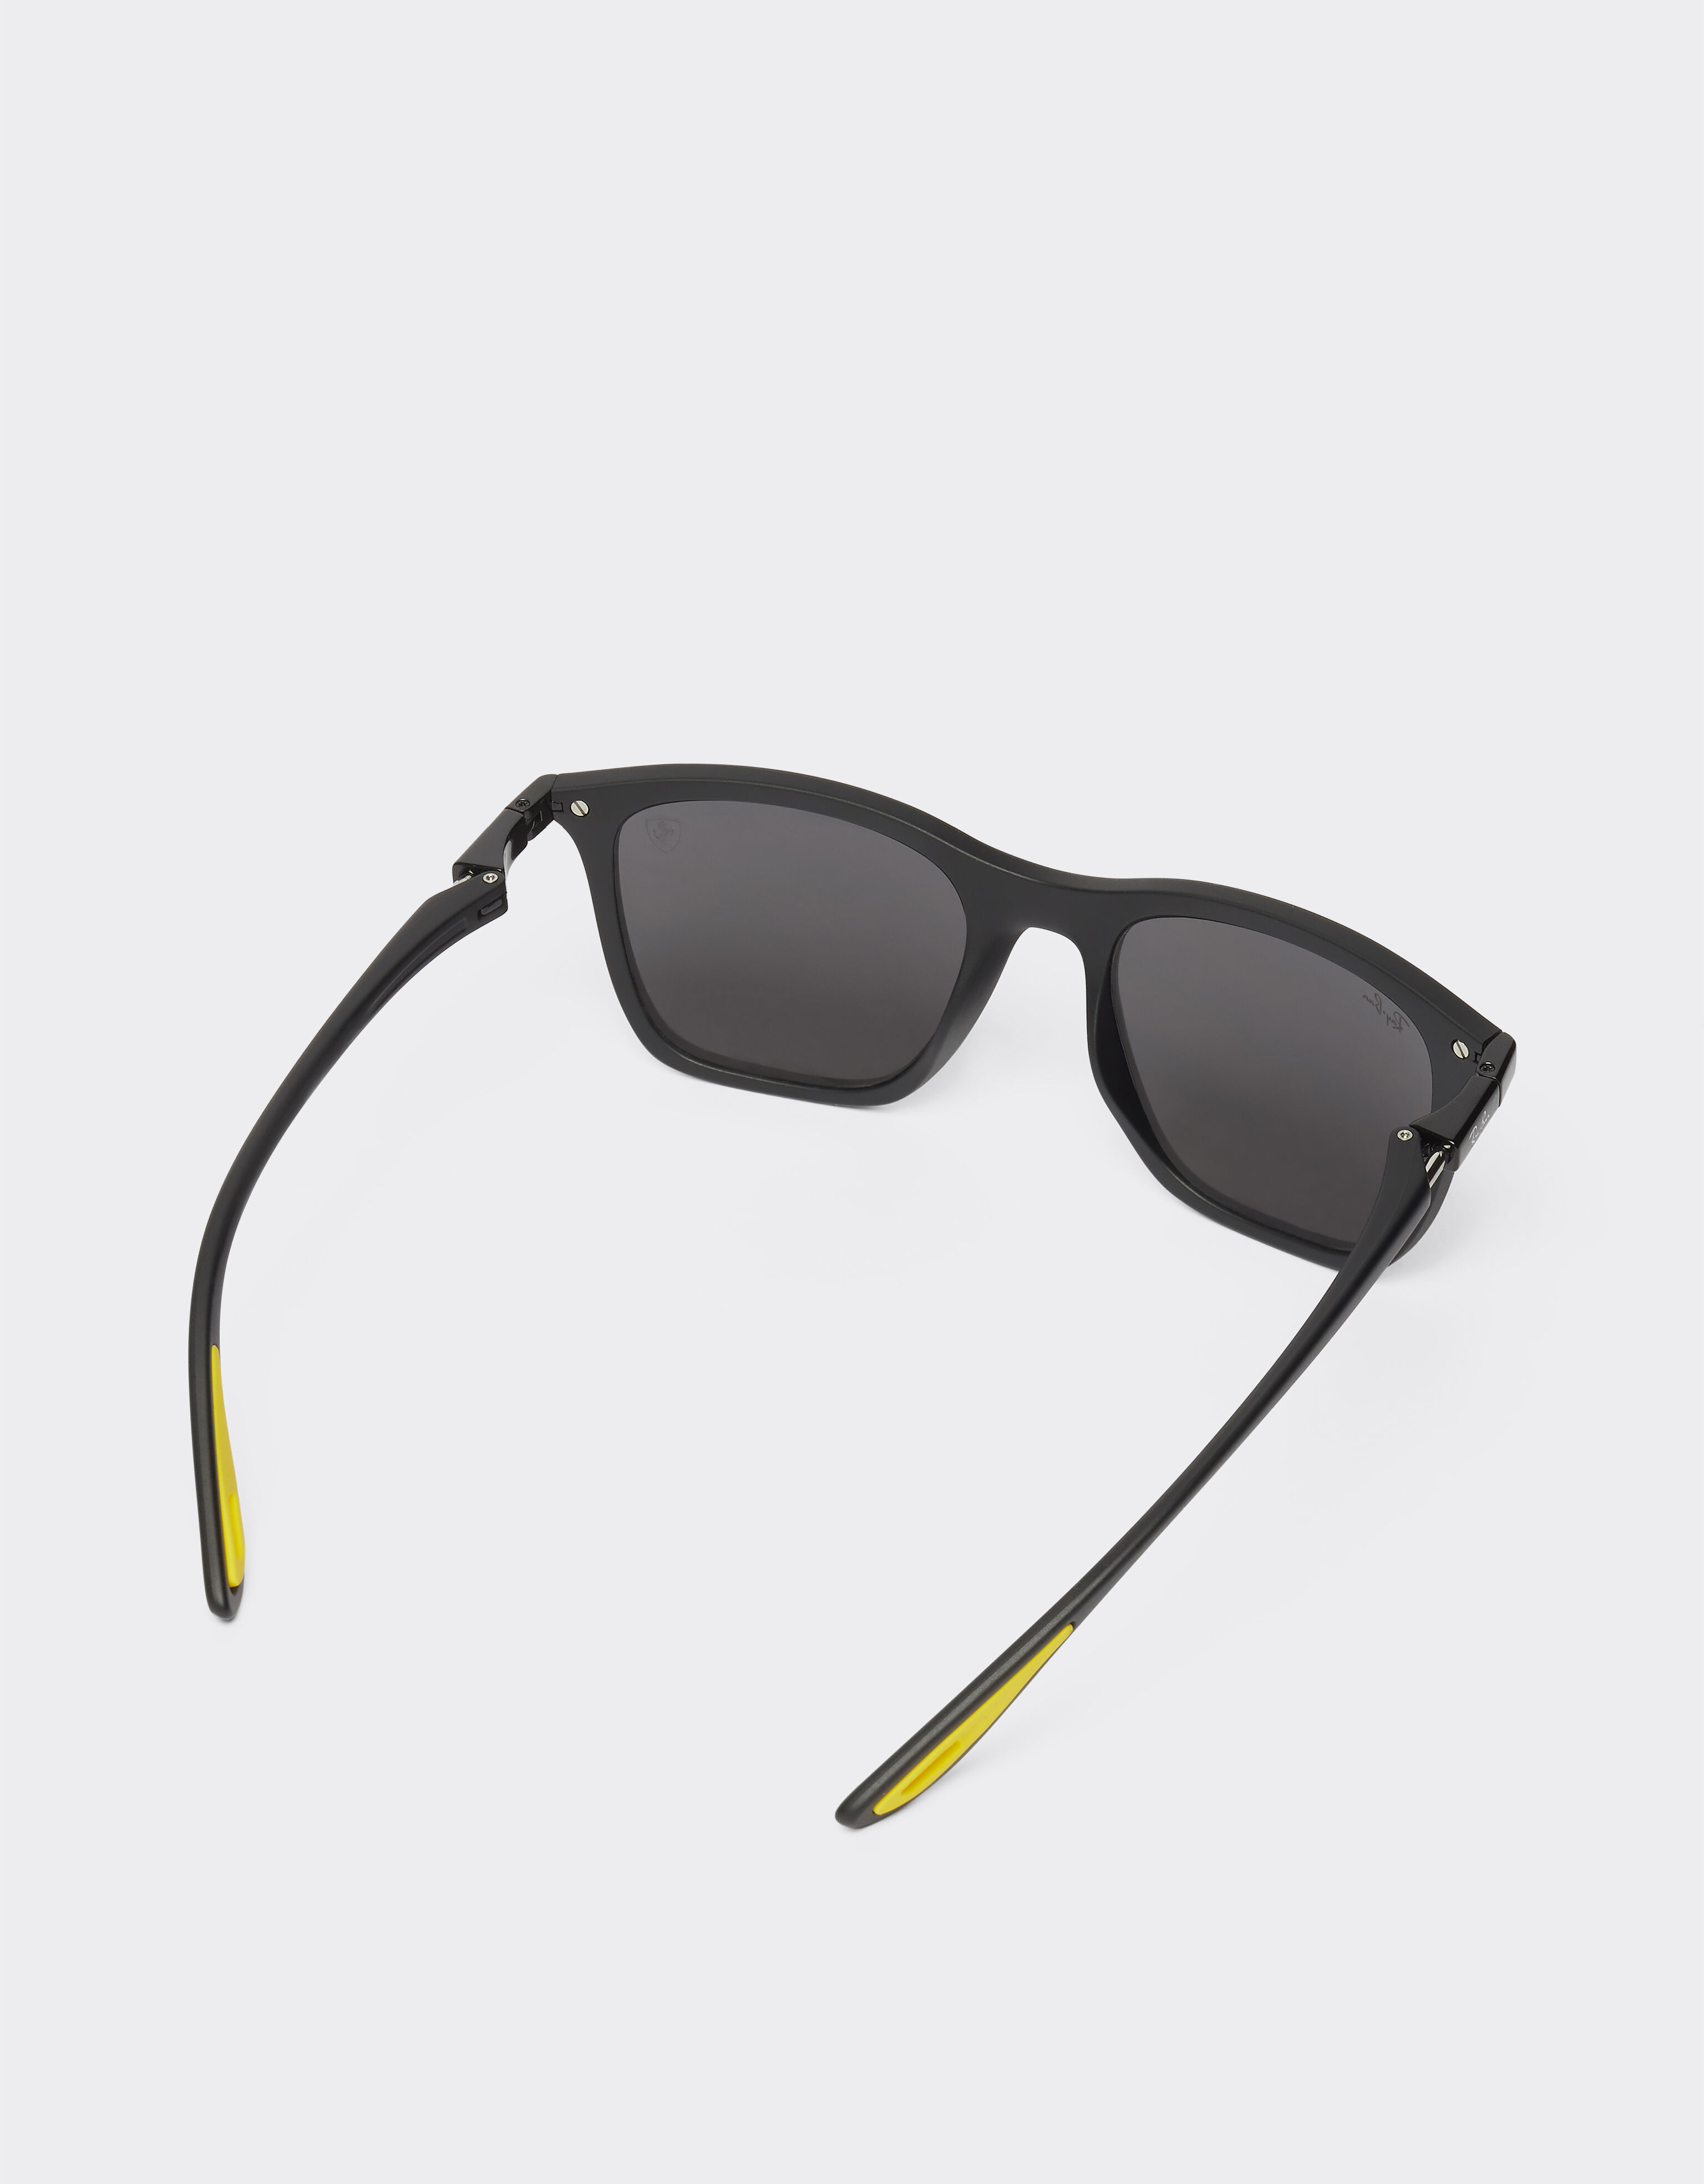 Ferrari Ray-Ban for Scuderia Ferrari 0RB4433M black sunglasses with dark grey lenses Black Matt F1260f